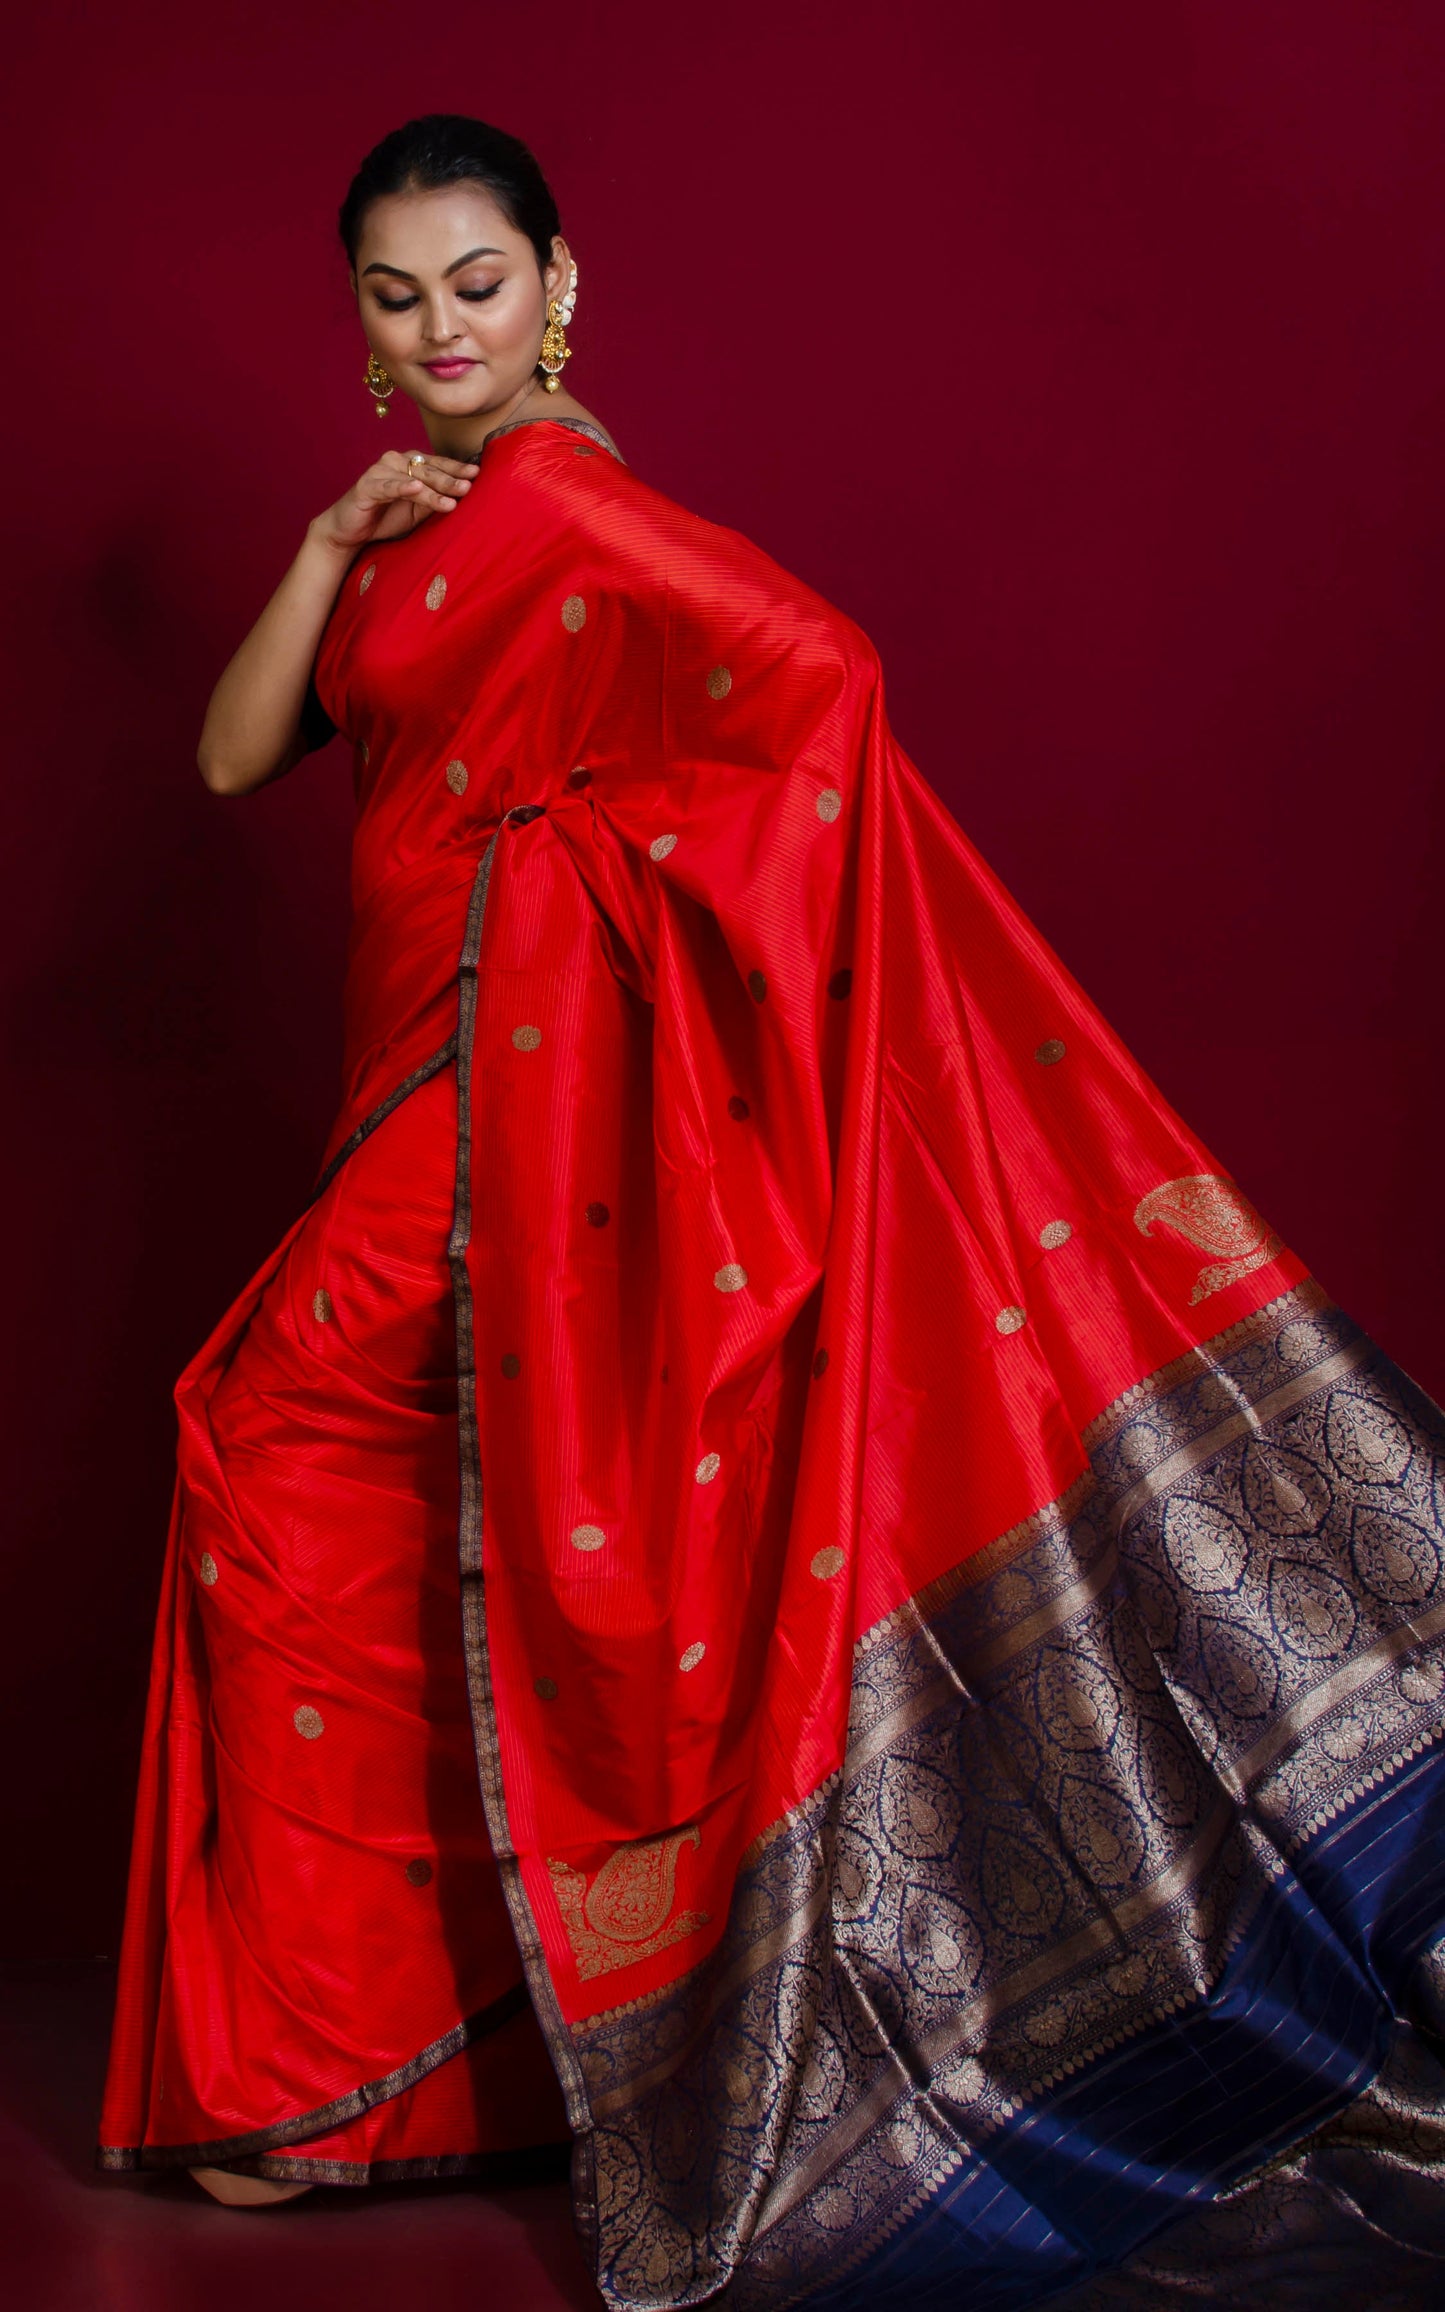 Woven Thread Nakshi Work Koniya Motif Pure Katan Banarasi Silk Saree in Red, Navy Blue and Antique Gold